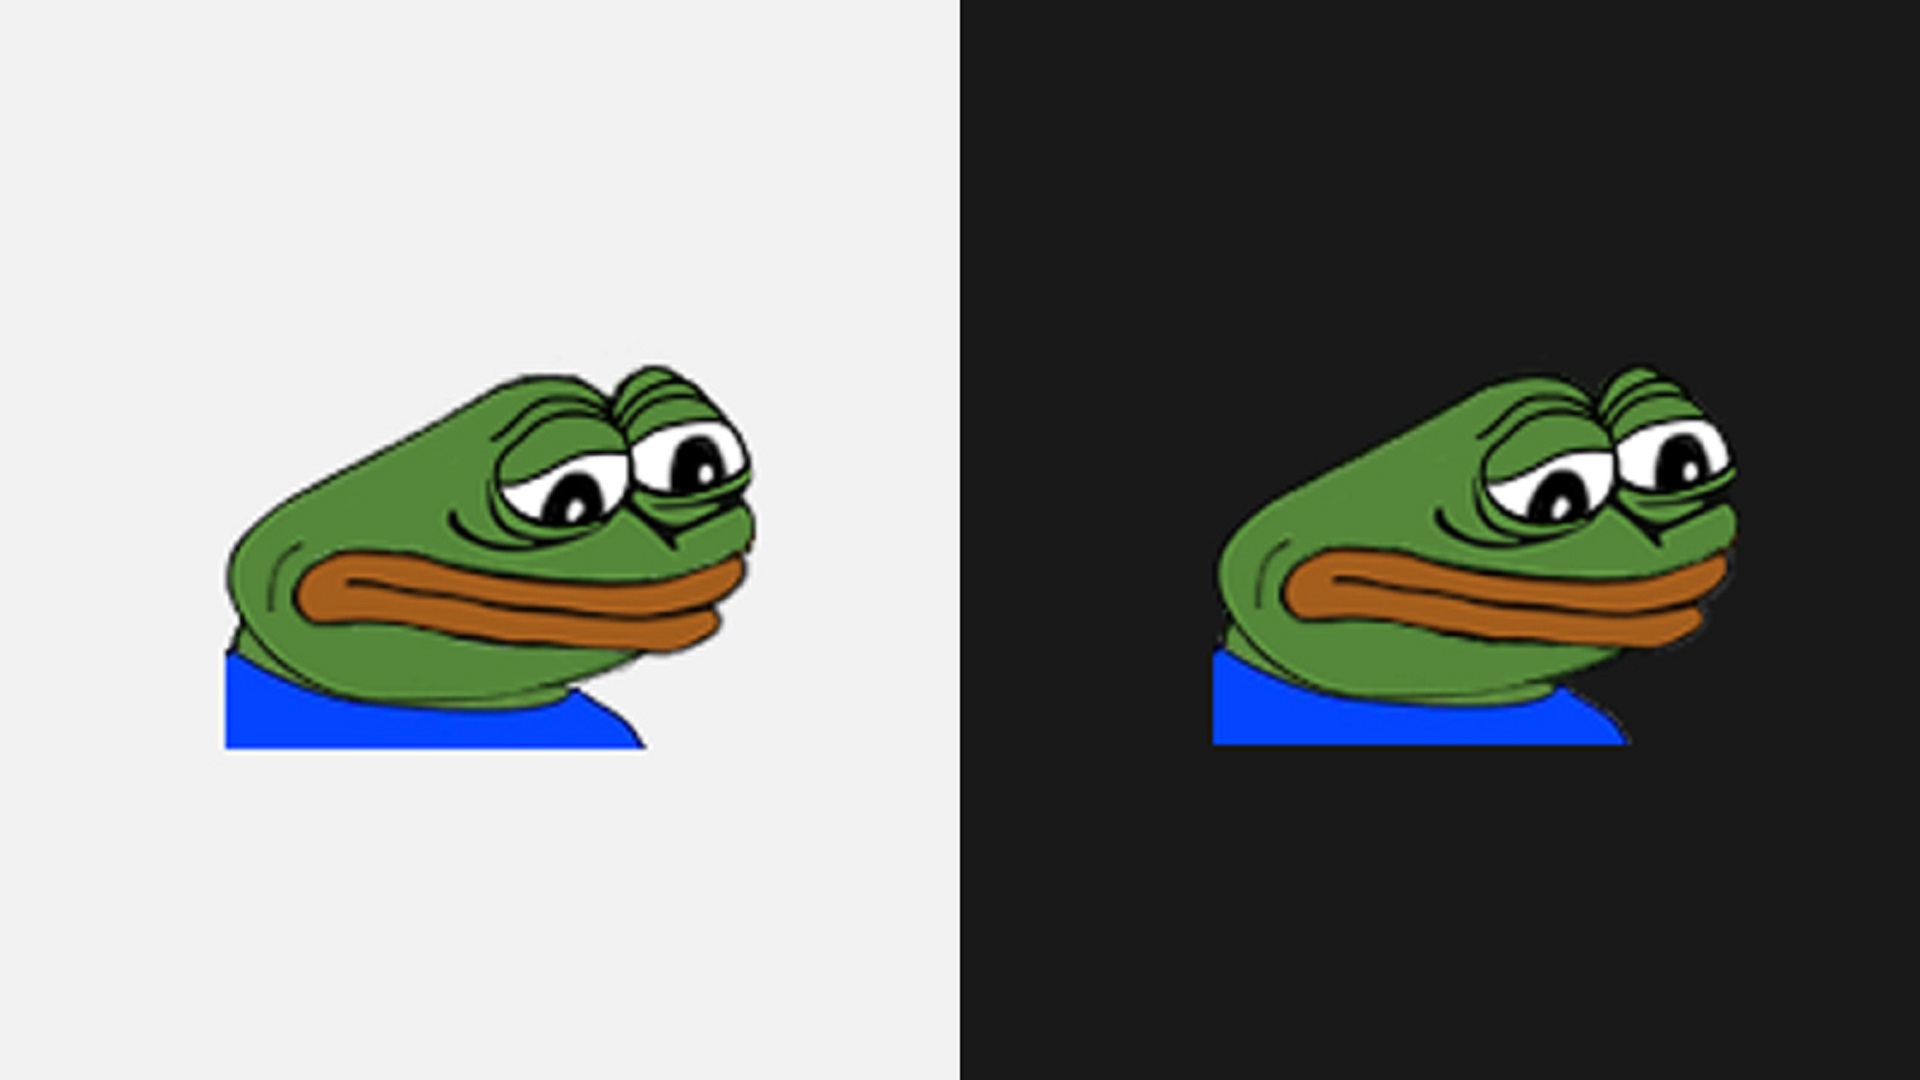 Pepe the Frog Sadge emotes